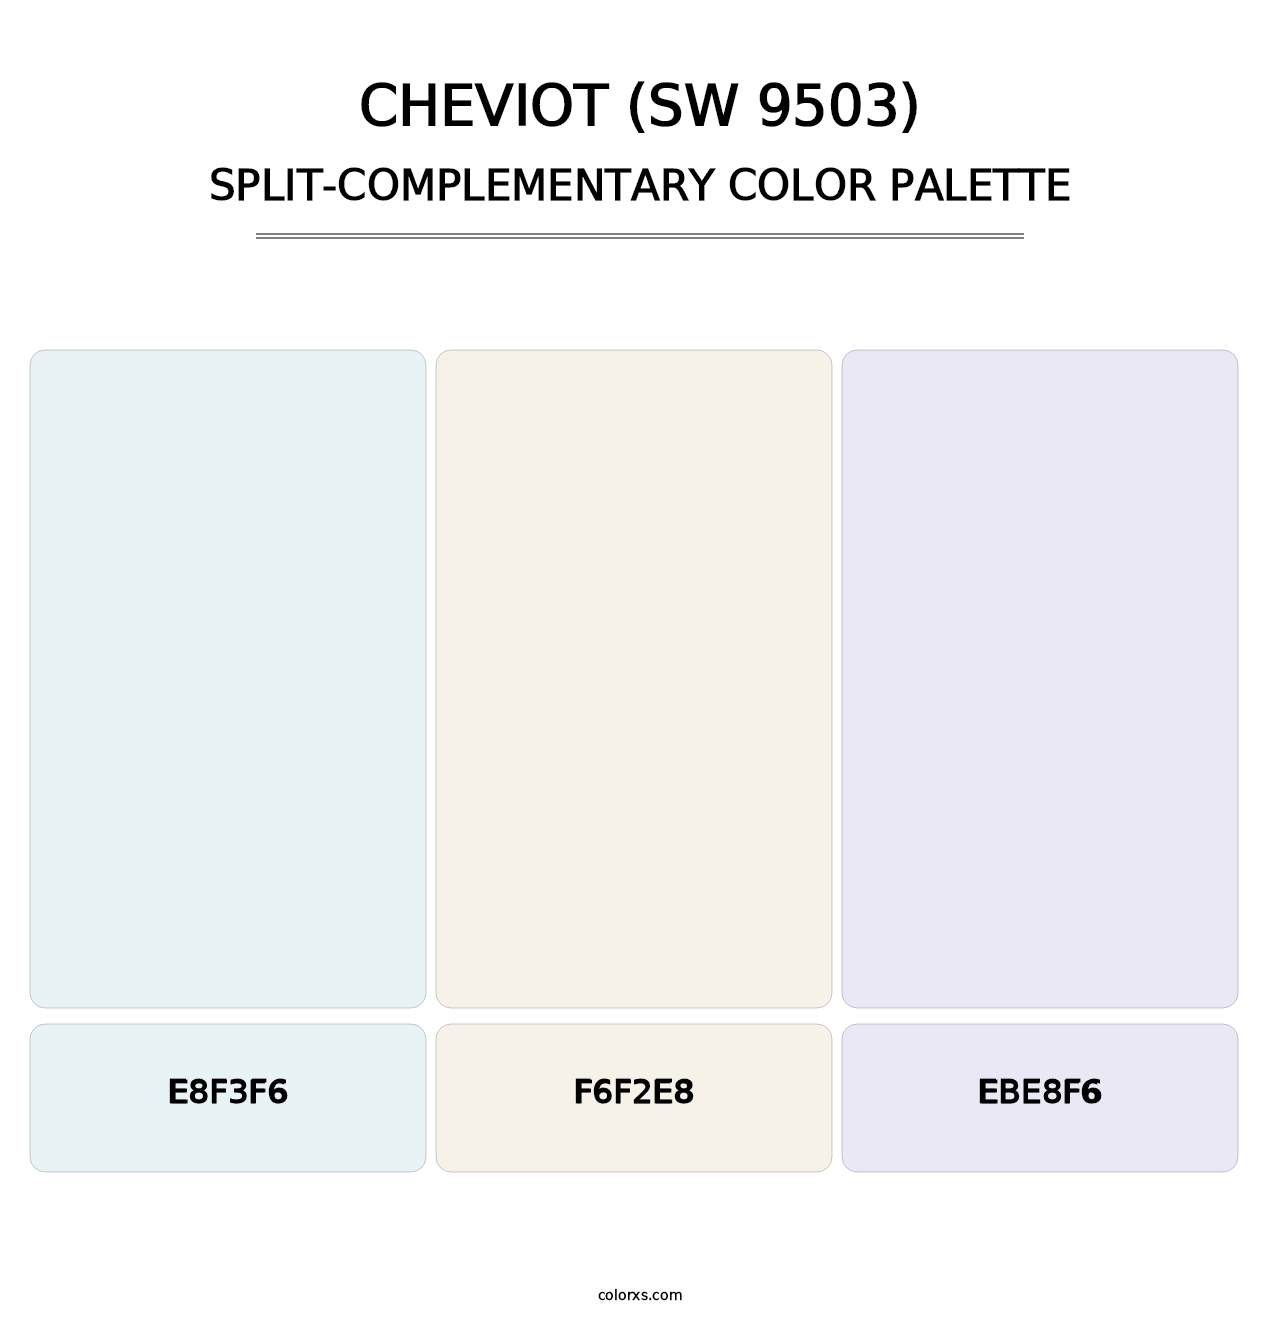 Cheviot (SW 9503) - Split-Complementary Color Palette